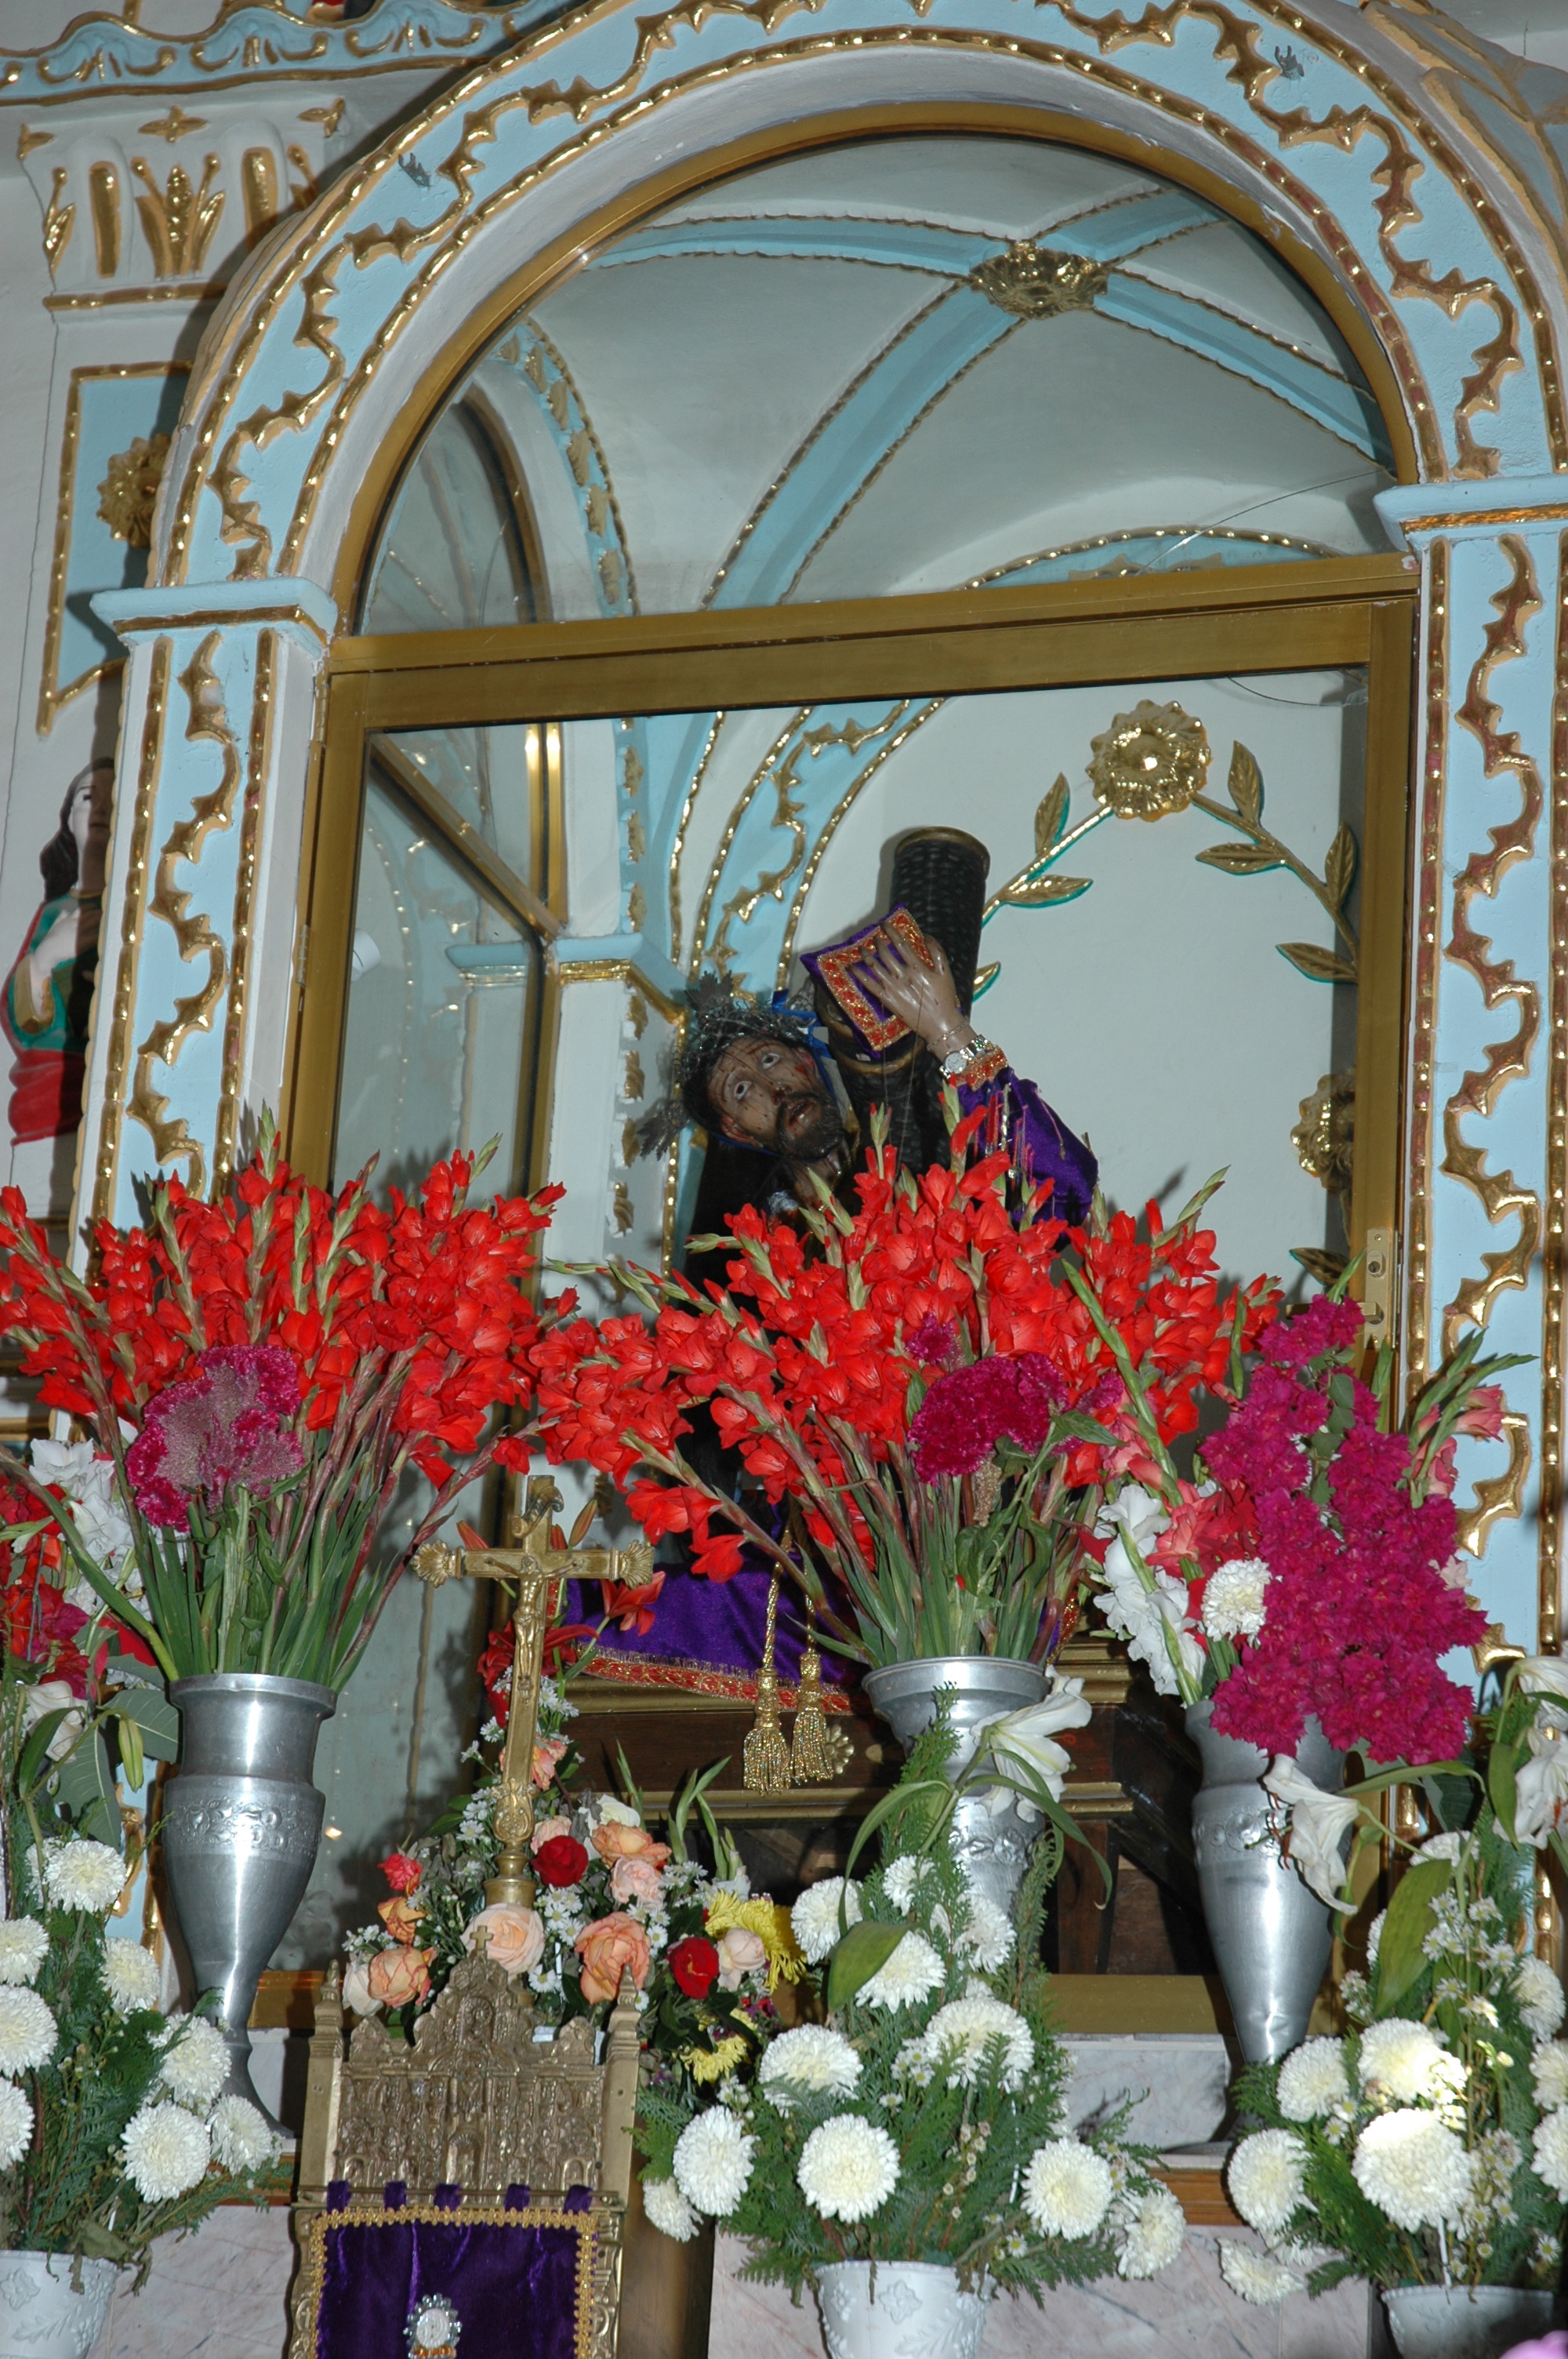 File:Padre jesus de nazaret  - Wikimedia Commons